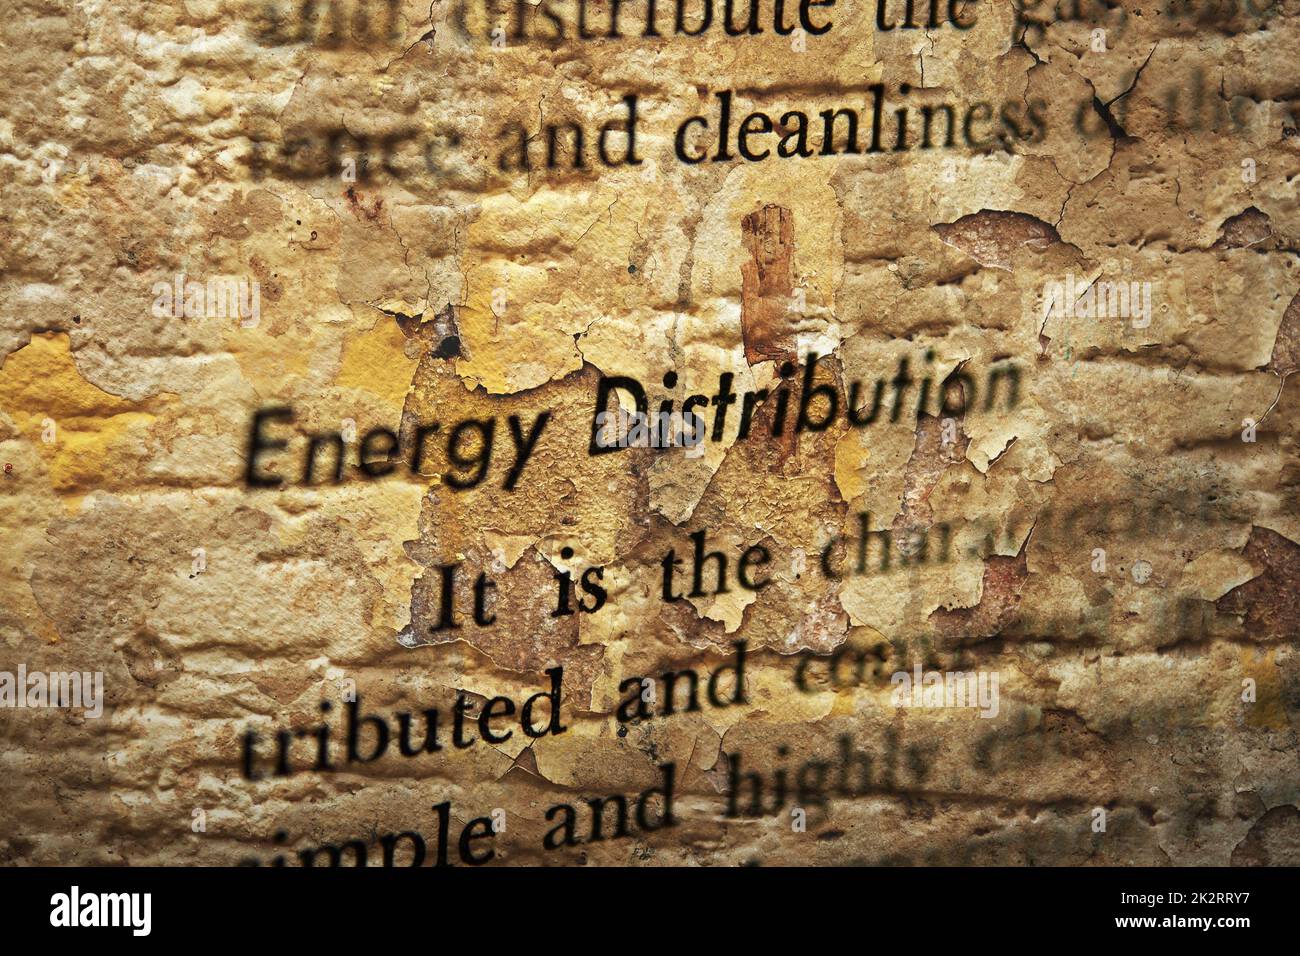 Energy distribution Stock Photo